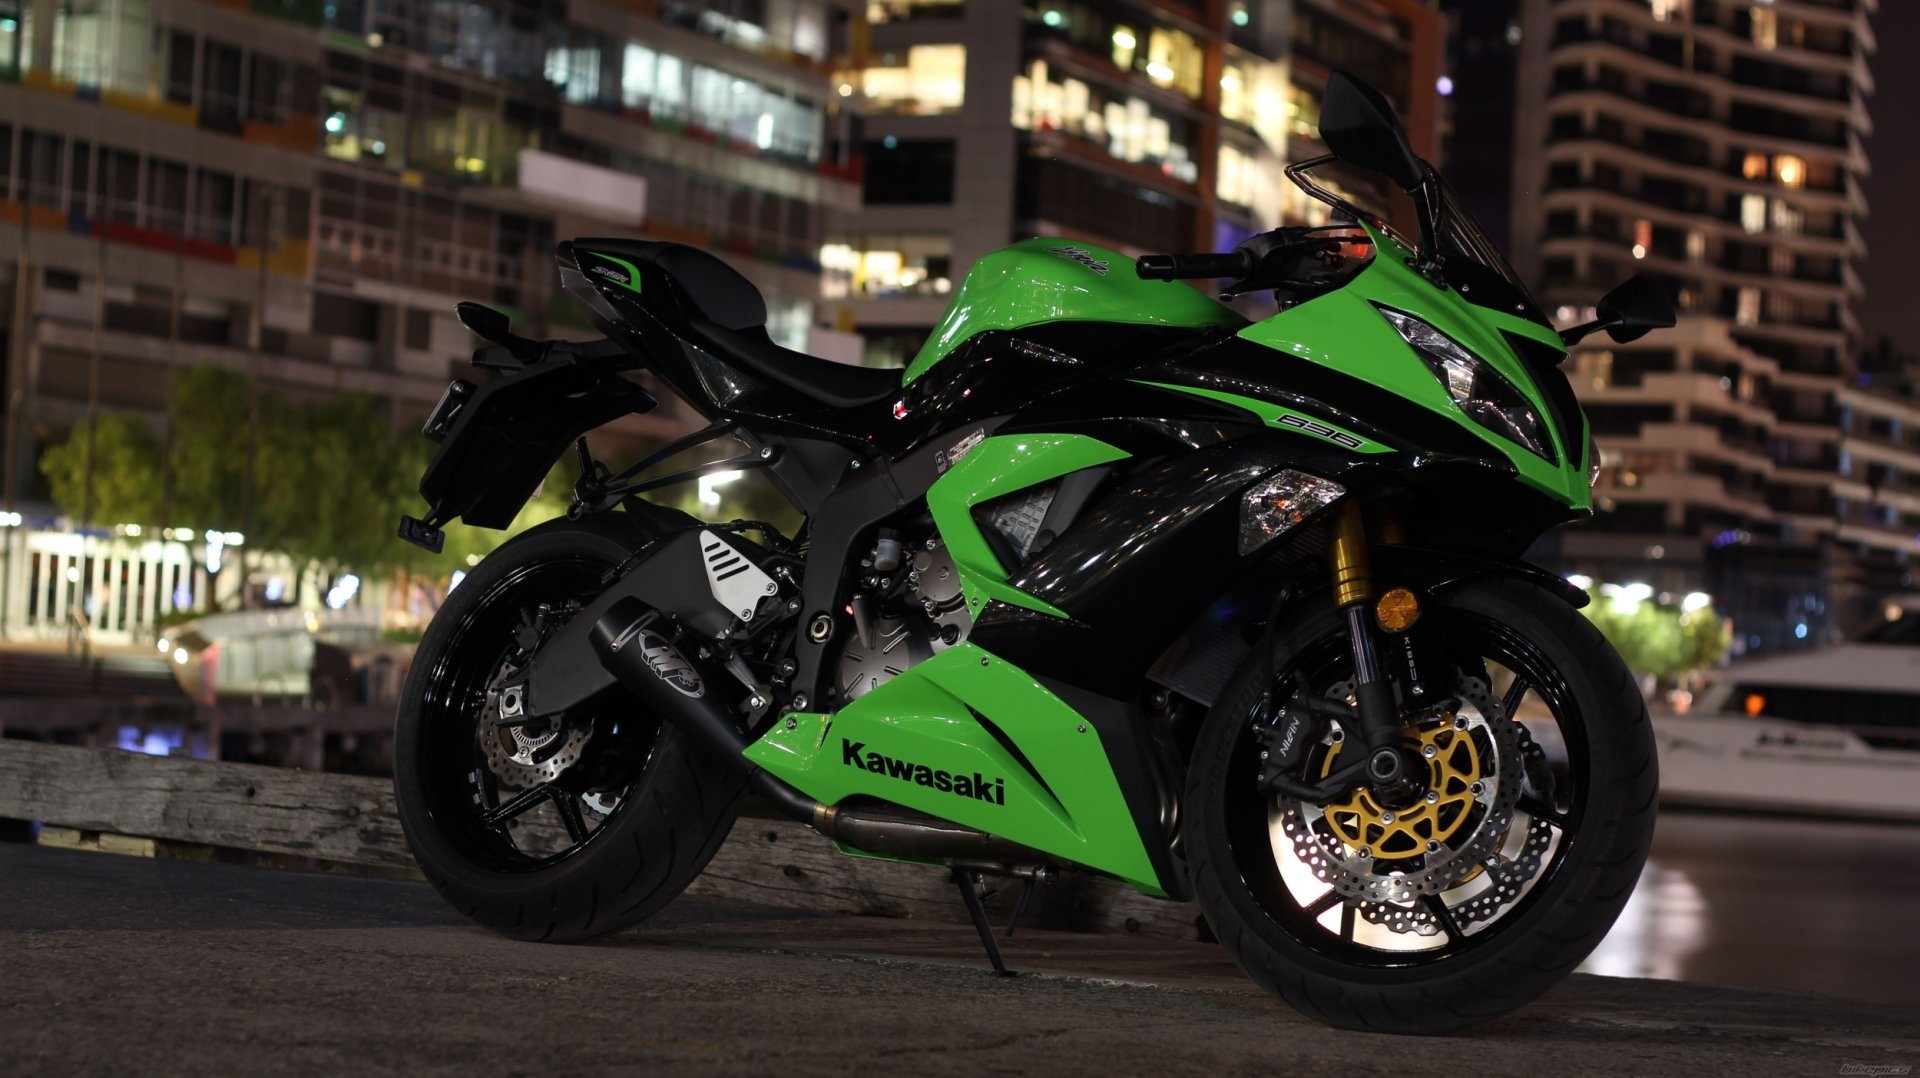 Kawasaki Ninja 1000 HD Bikes 4k Wallpapers Images Backgrounds Photos  and Pictures